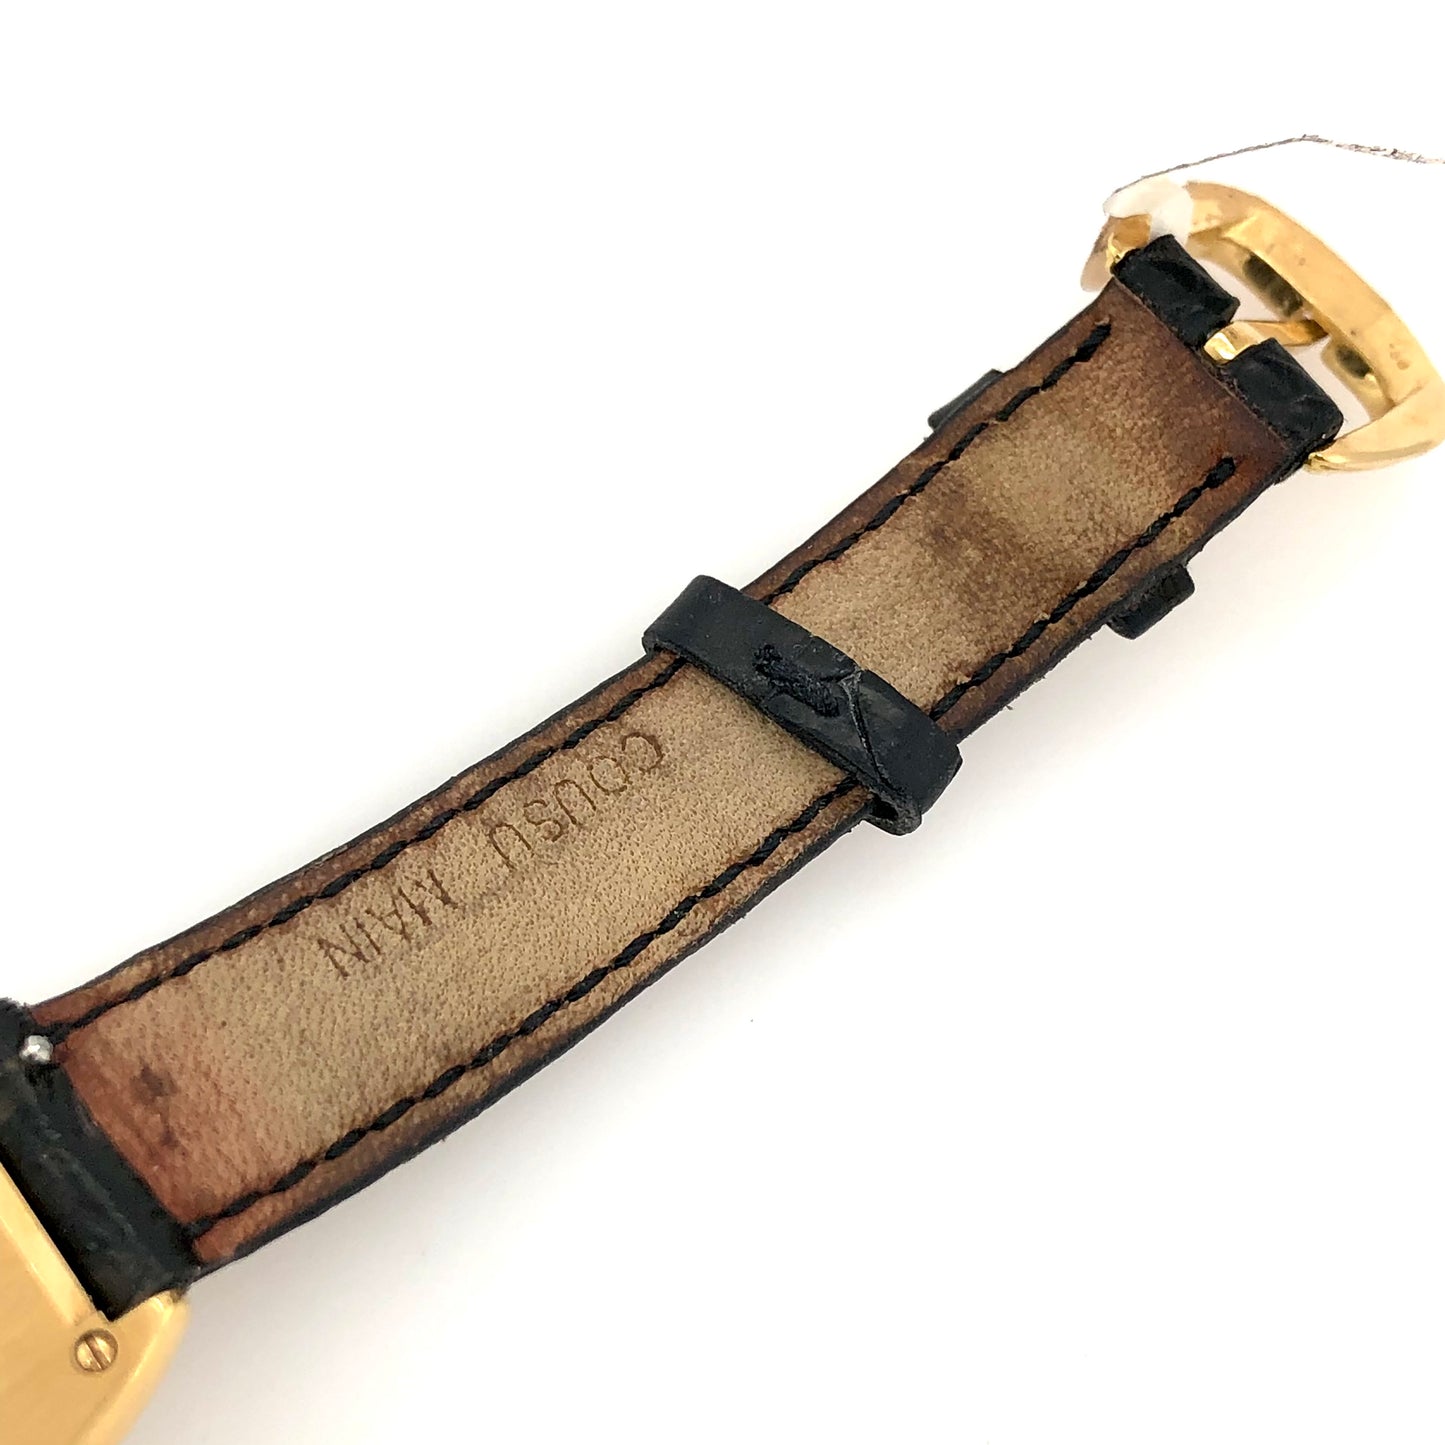 FRANCK MULLER CURVEX 25mm Hand Winding 18K Yellow Gold Skeleton Backcase Watch